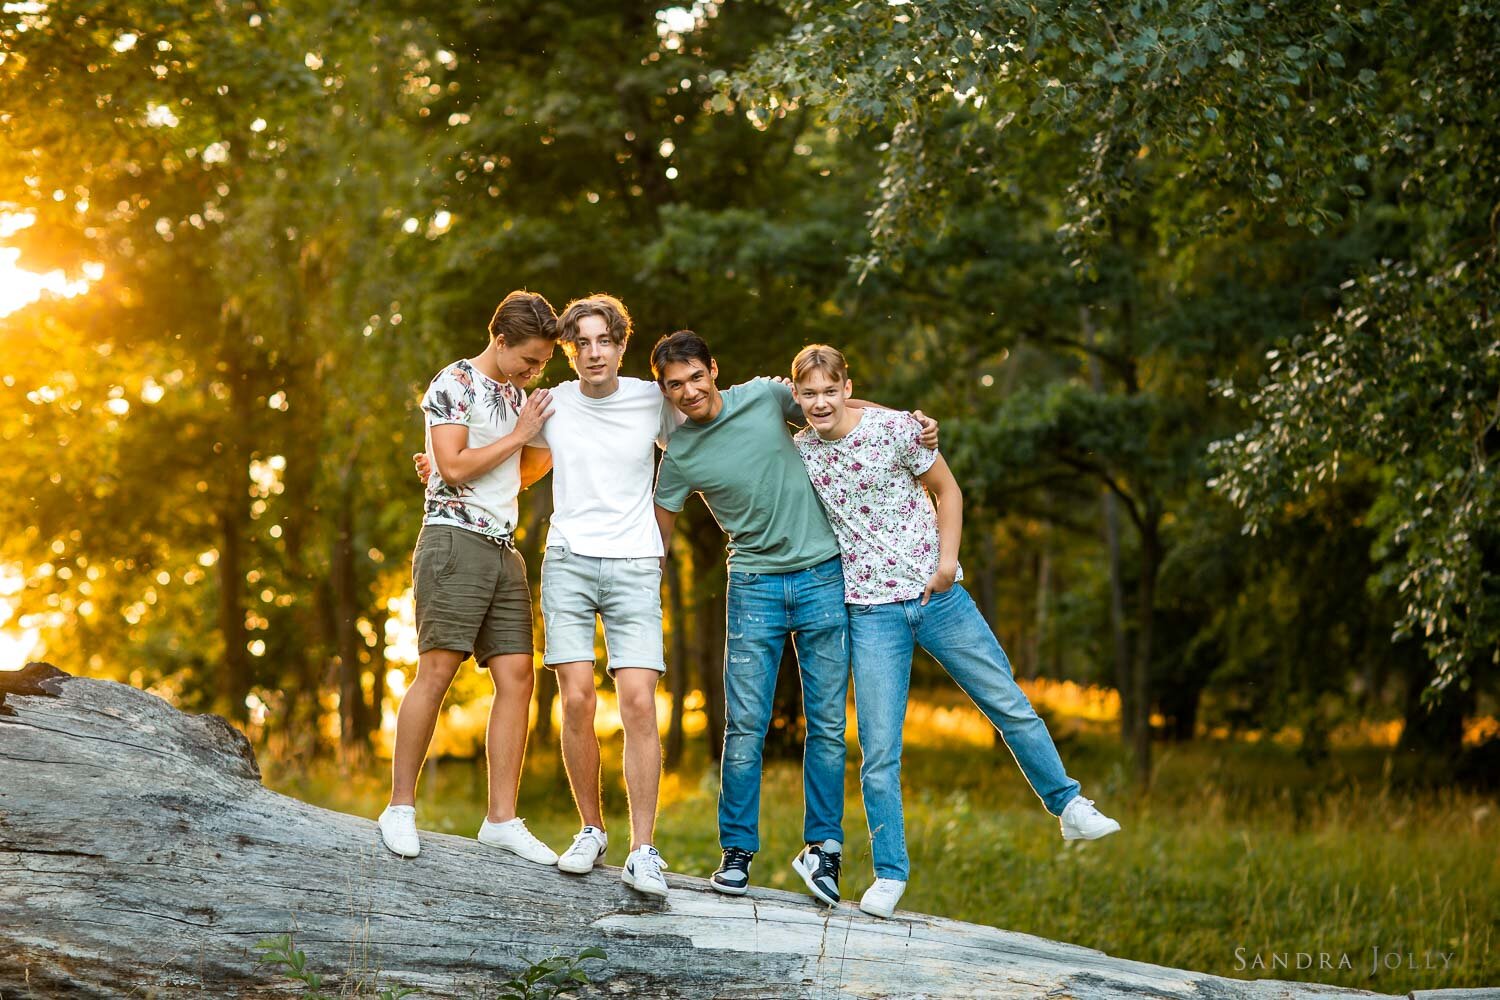 teenage-boys-having-fun-by-stockholm-portrait-photographer-sandra-jolly-photography.jpg